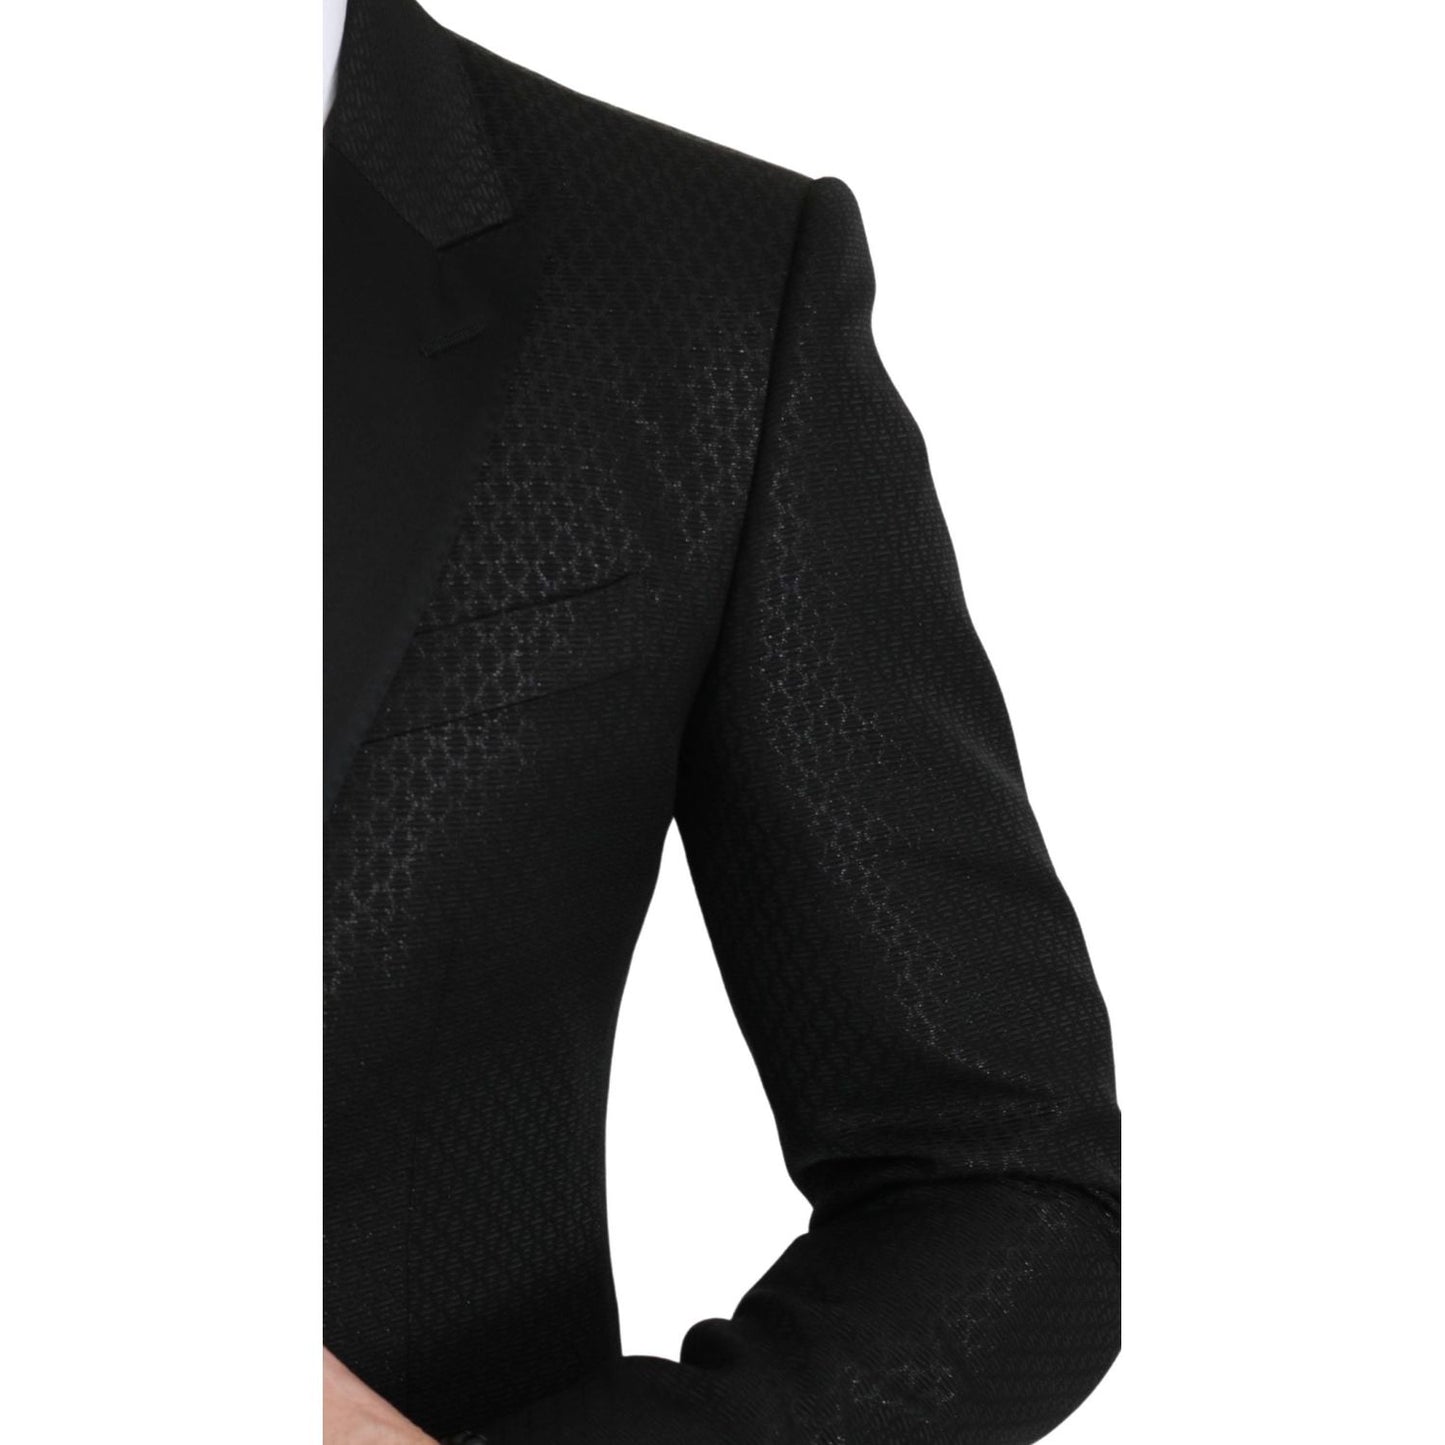 Dolce & Gabbana Slim Fit Martini Black Blazer Jacket Suit black-slim-fit-jacket-martini-blazer IMG_1017-scaled-4d85004d-fca.jpg